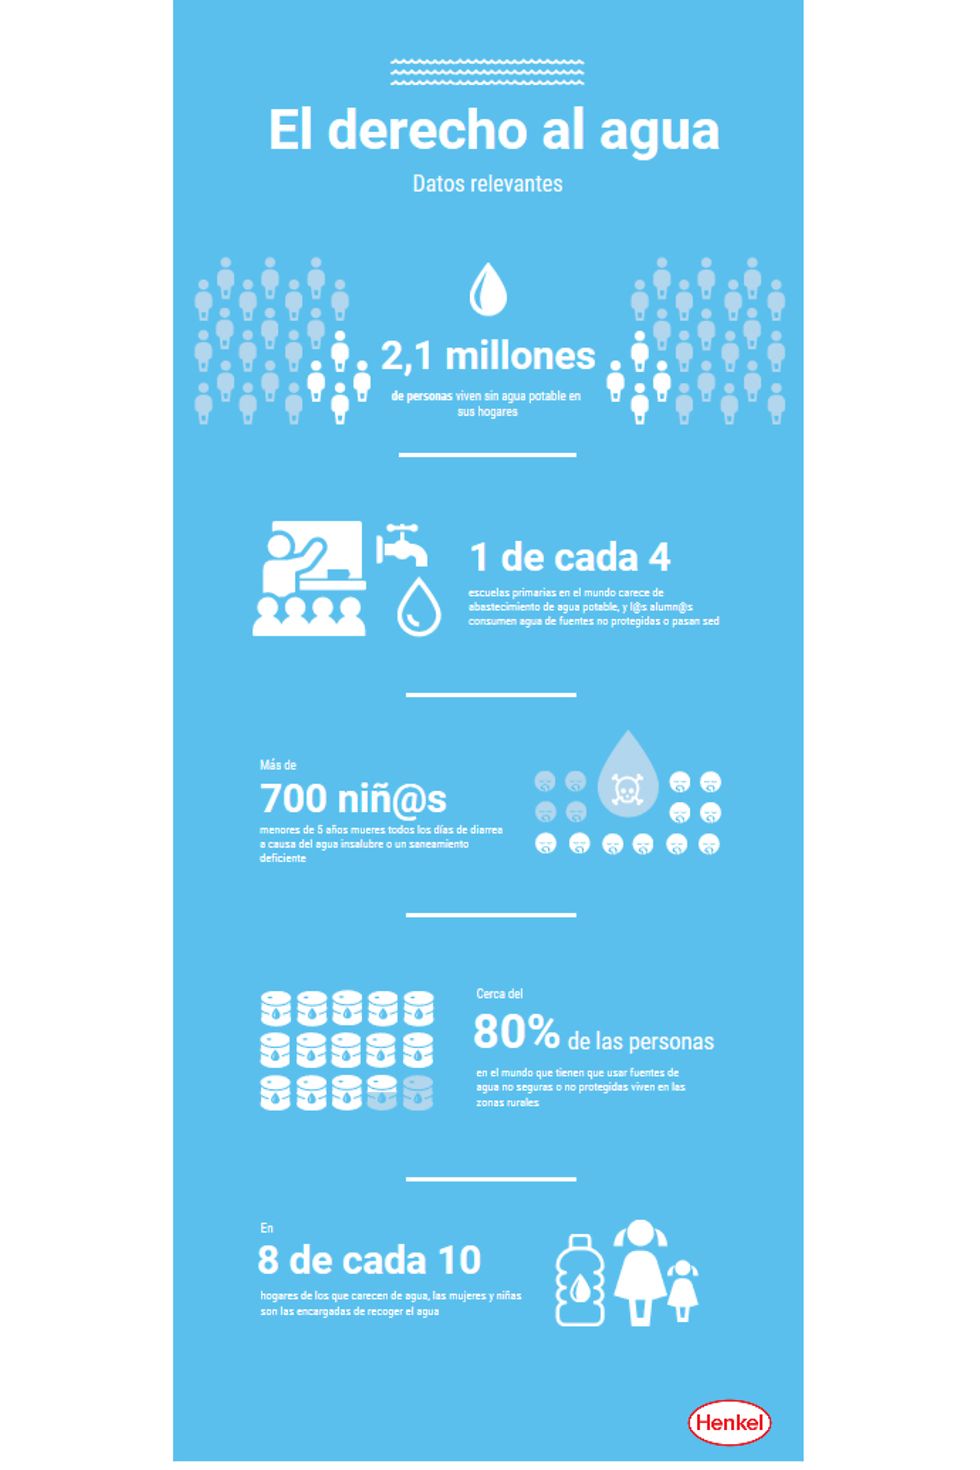 Infografía Día Mundial del Agua